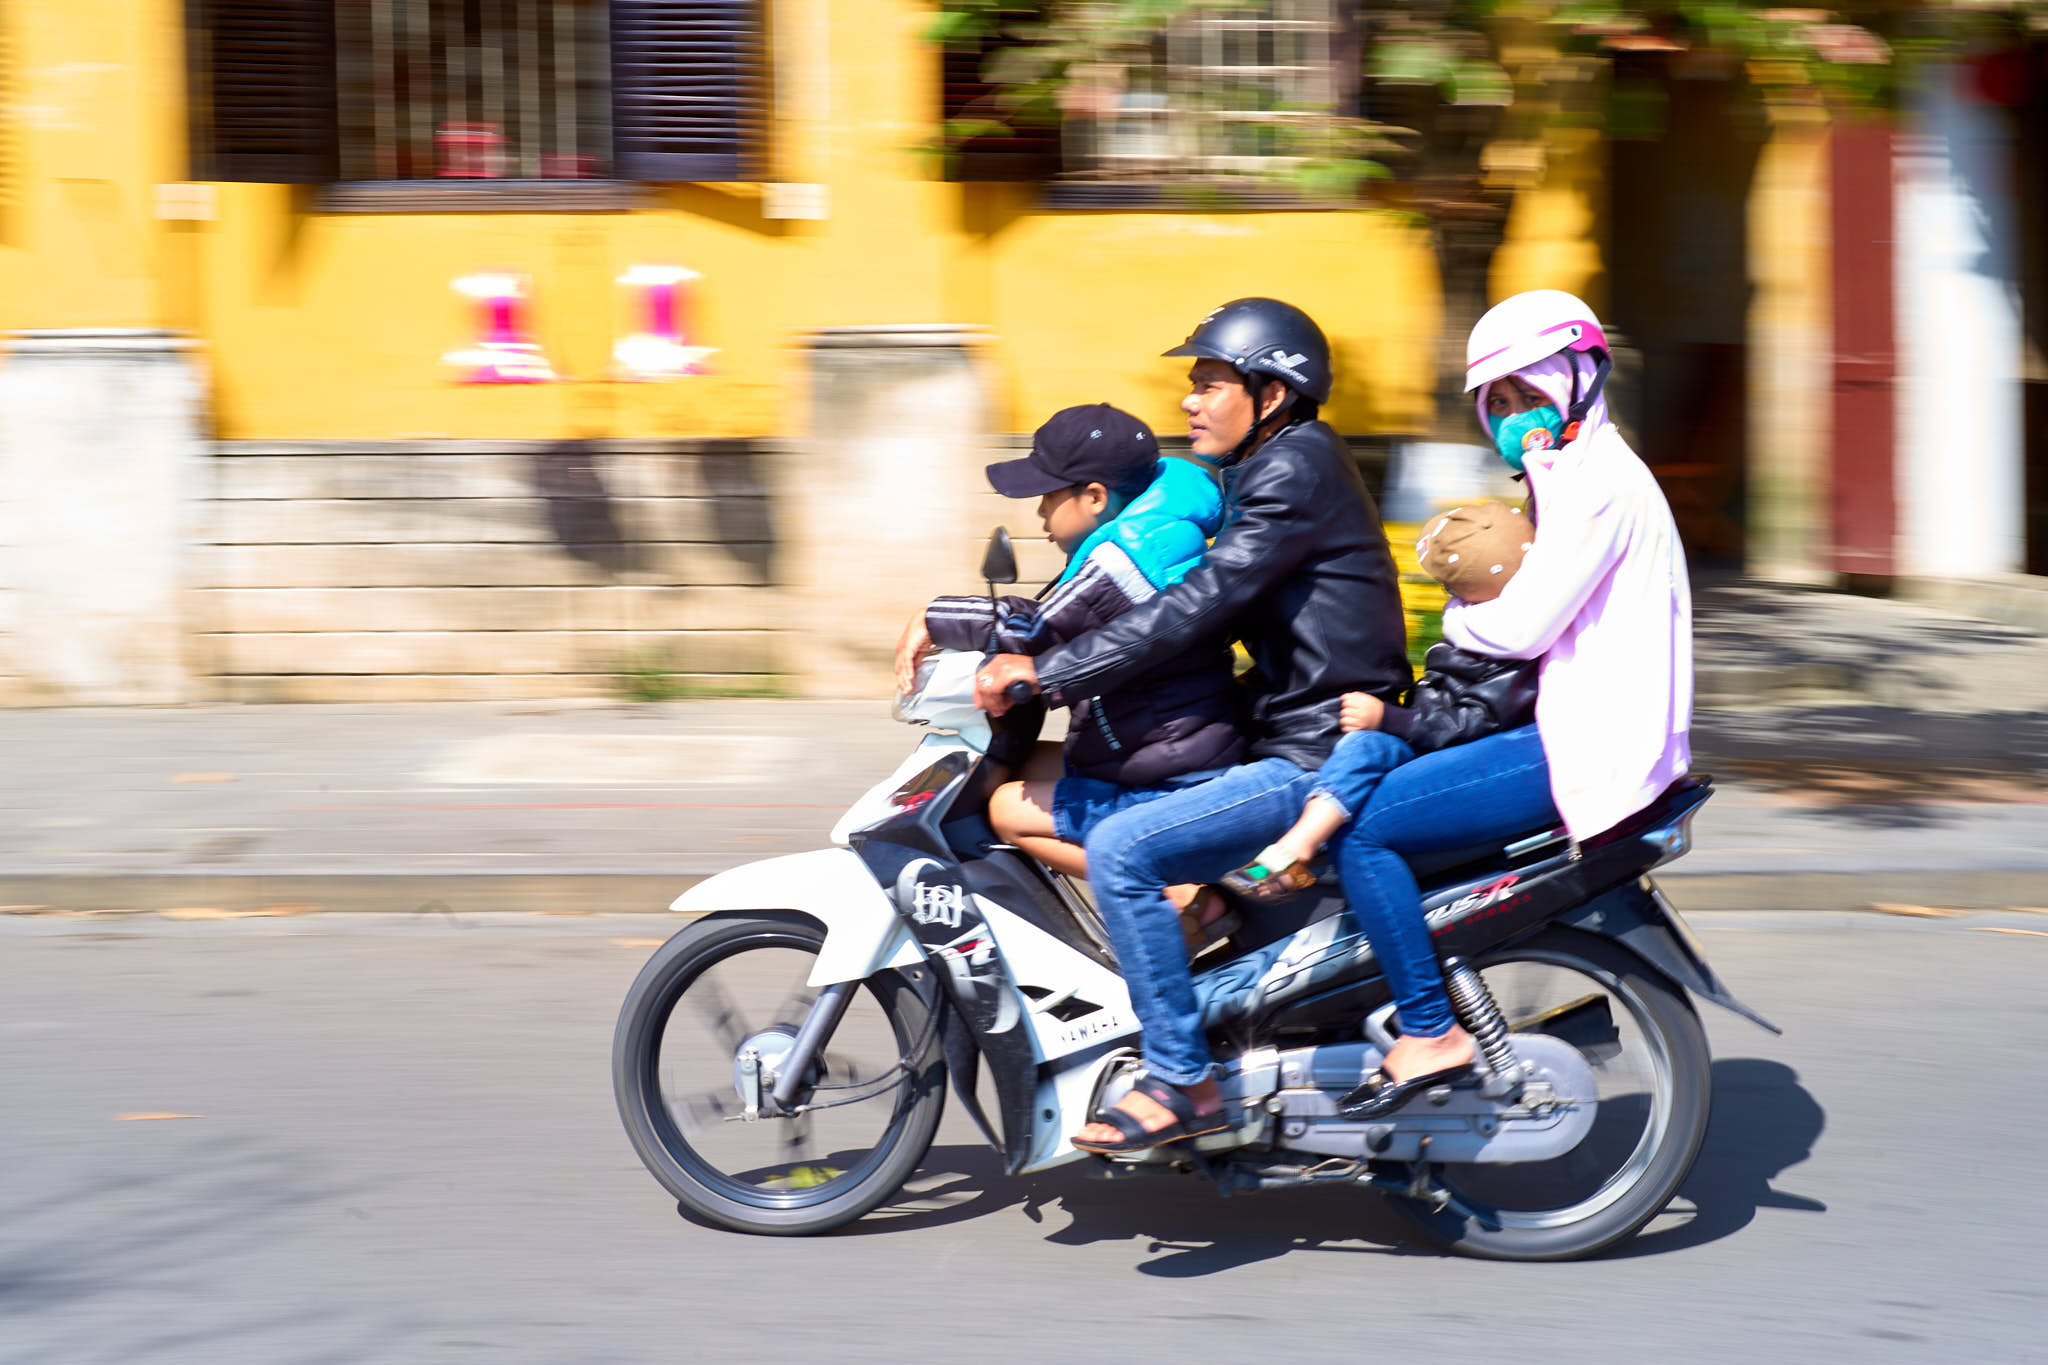 Motorcycle family in Hanoi, Vietnam; LEICA M10 50mm ISO-100 1/45sec